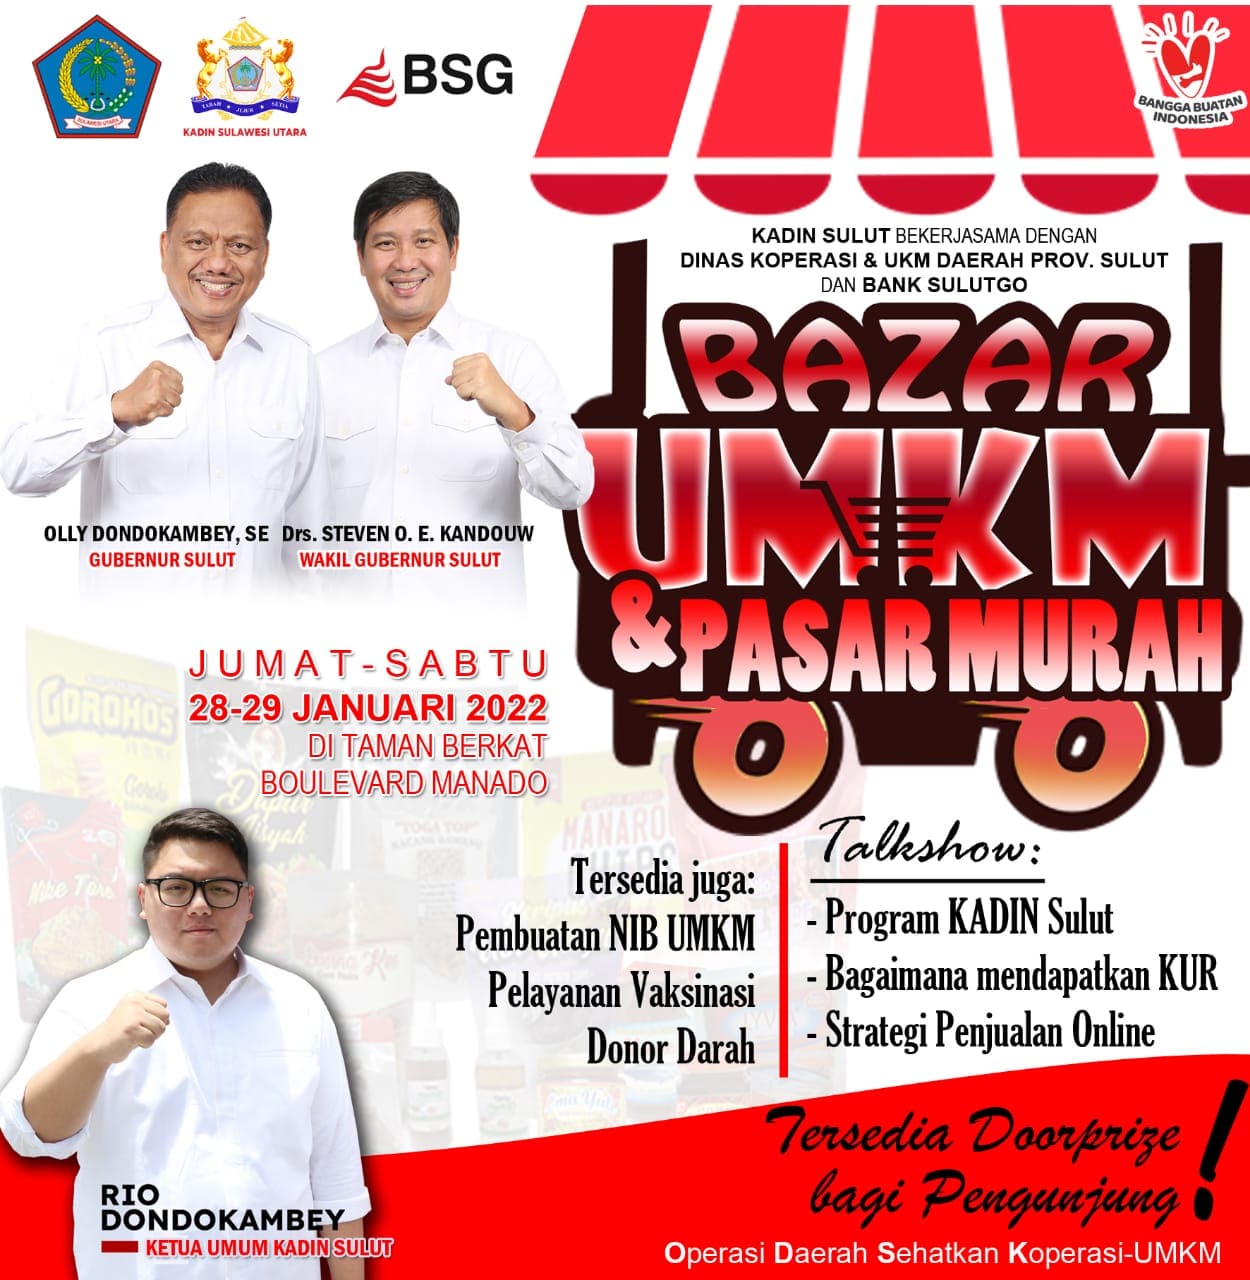 Bazaar Kadin UMKM dan Pasar Murah, 28-29 Januari 2022